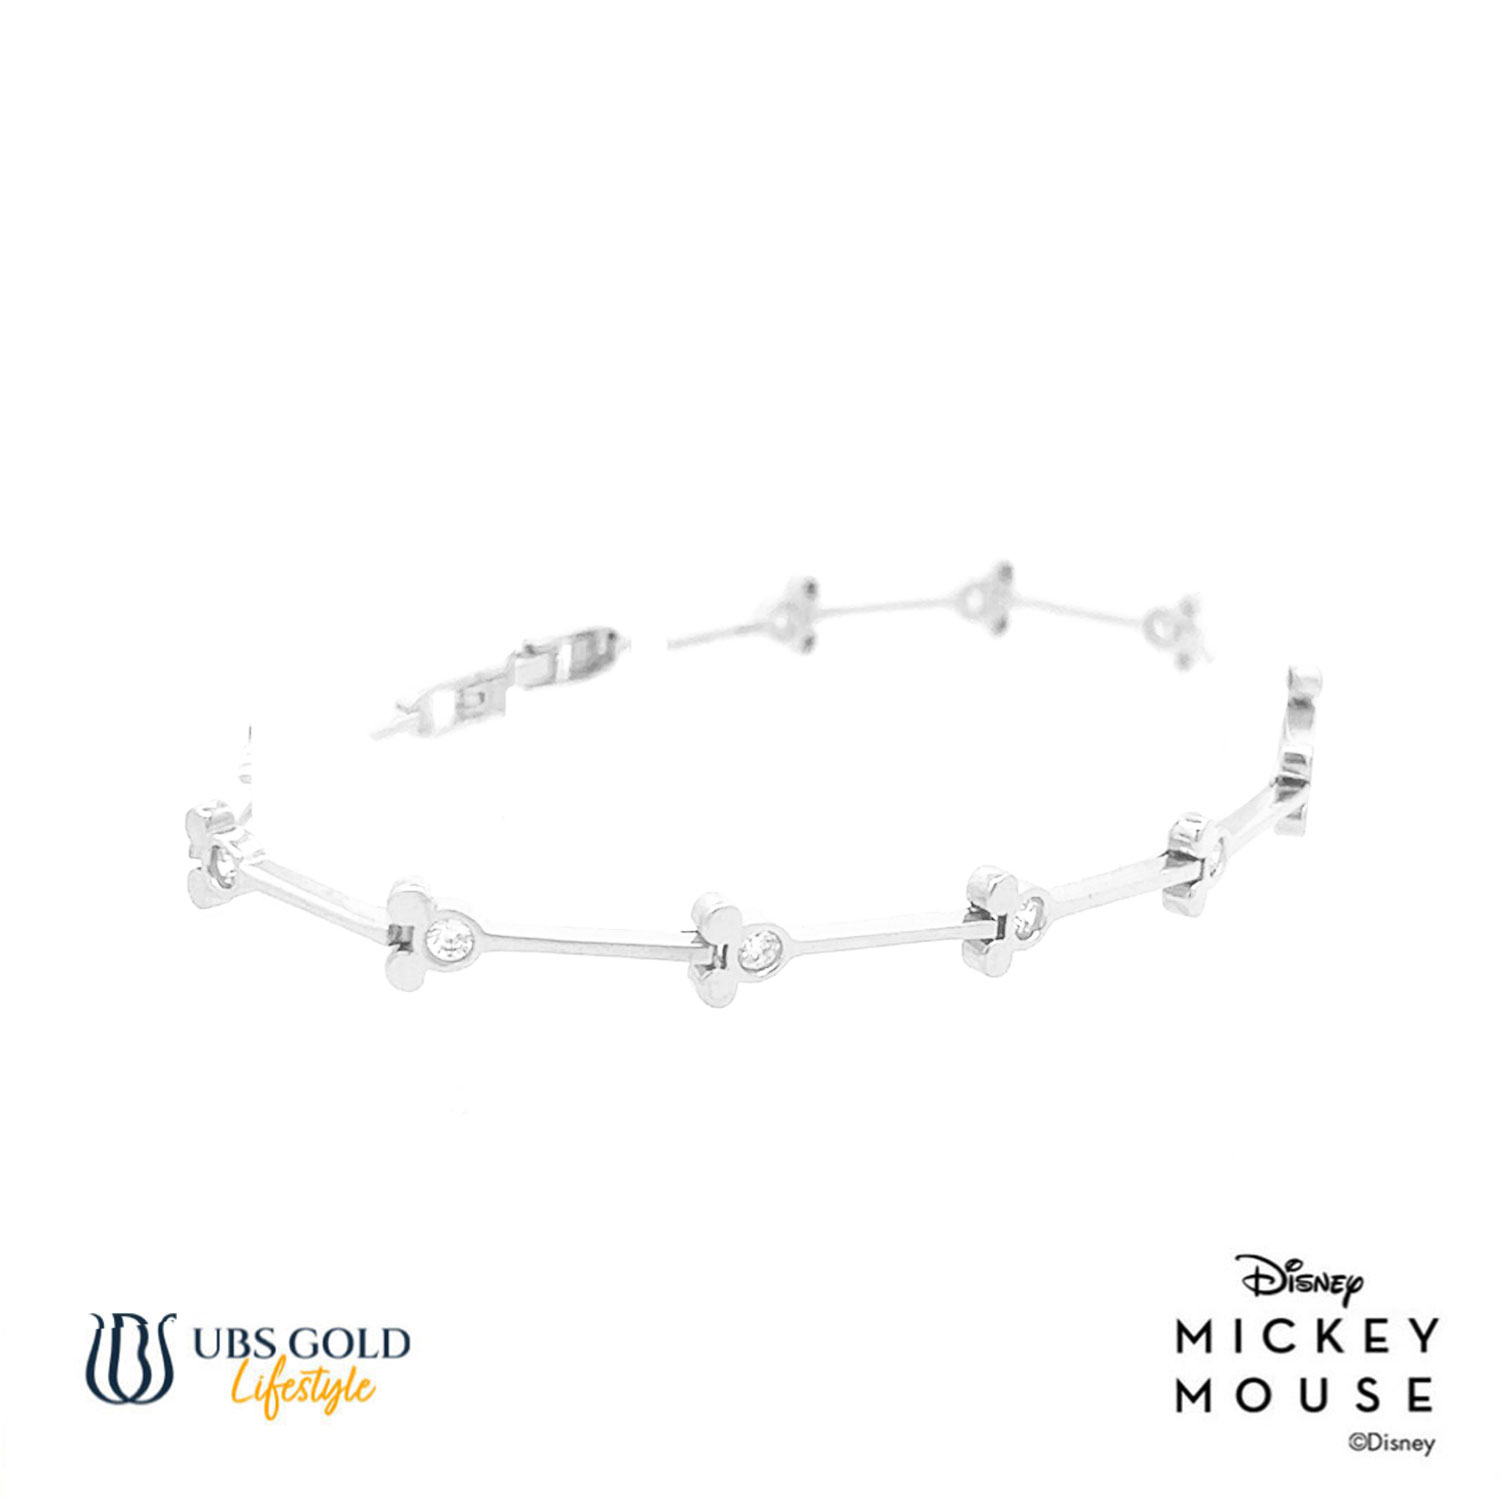 UBS Gold Gelang Emas Disney Mickey Mouse - Cgy0006 - 17K